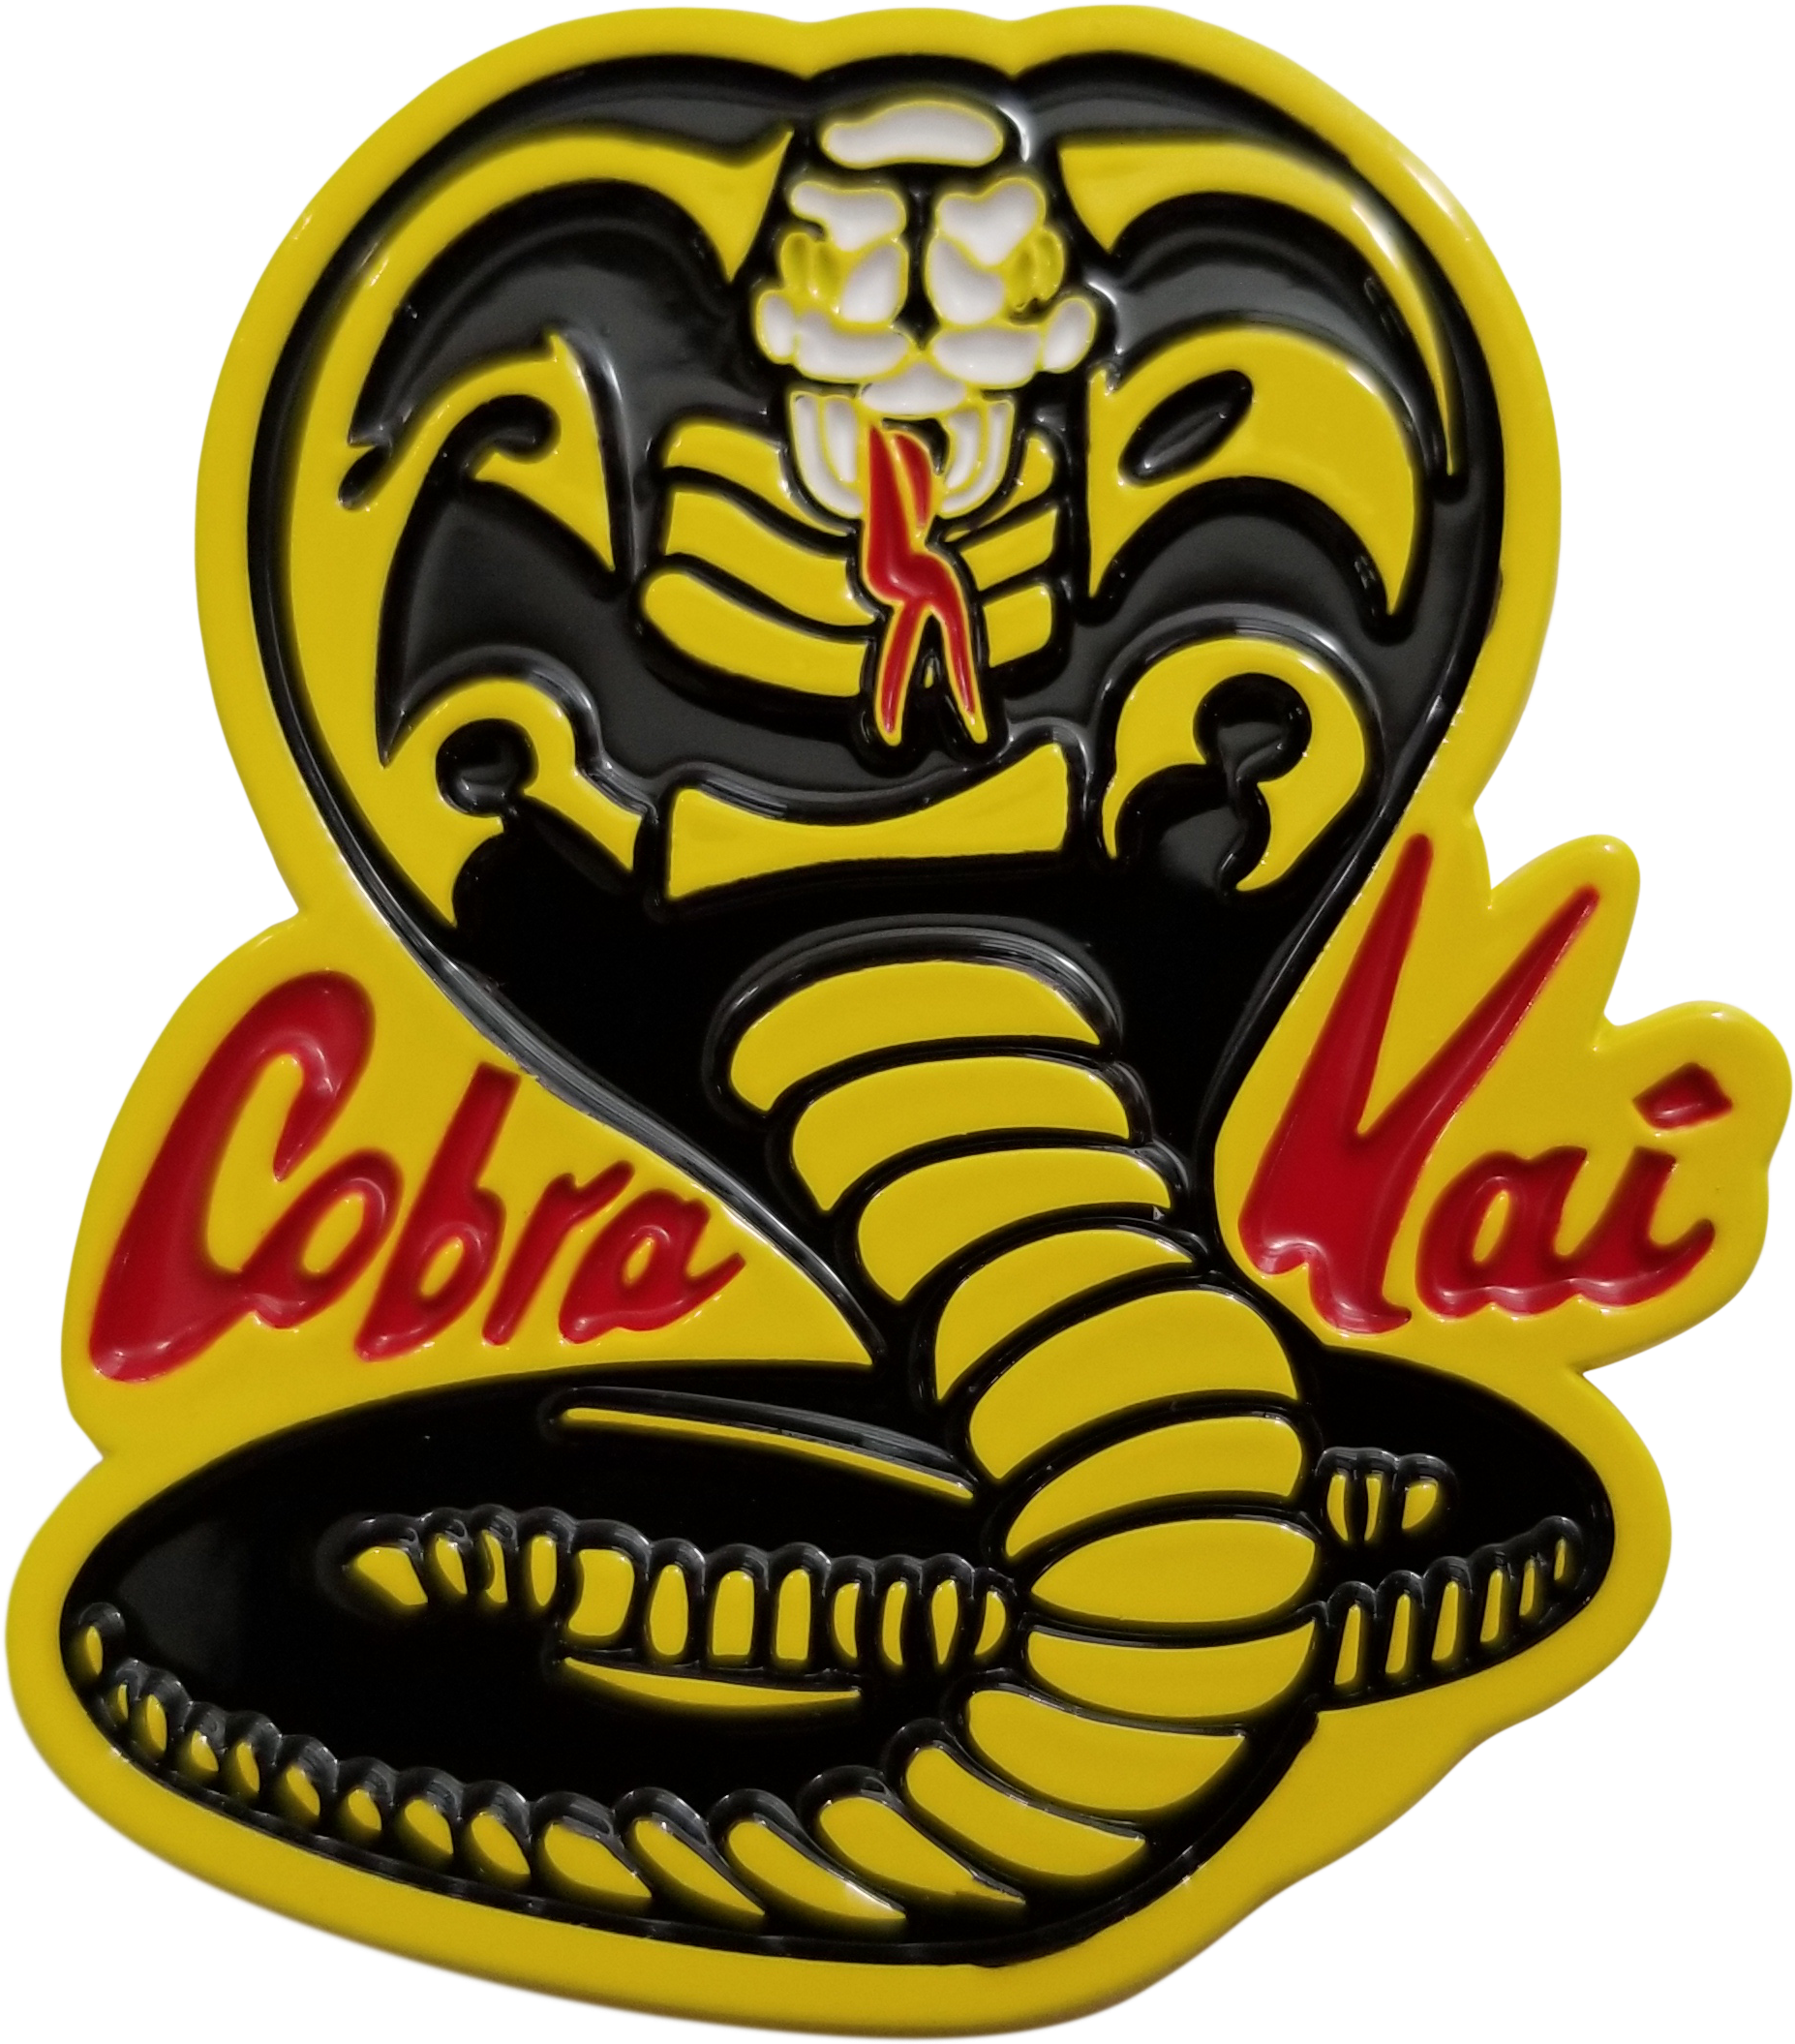 The Karate Kid Cobra Kai Logo Enamel Pin Kai Wallpaper iPhone Clipart Size Clipart